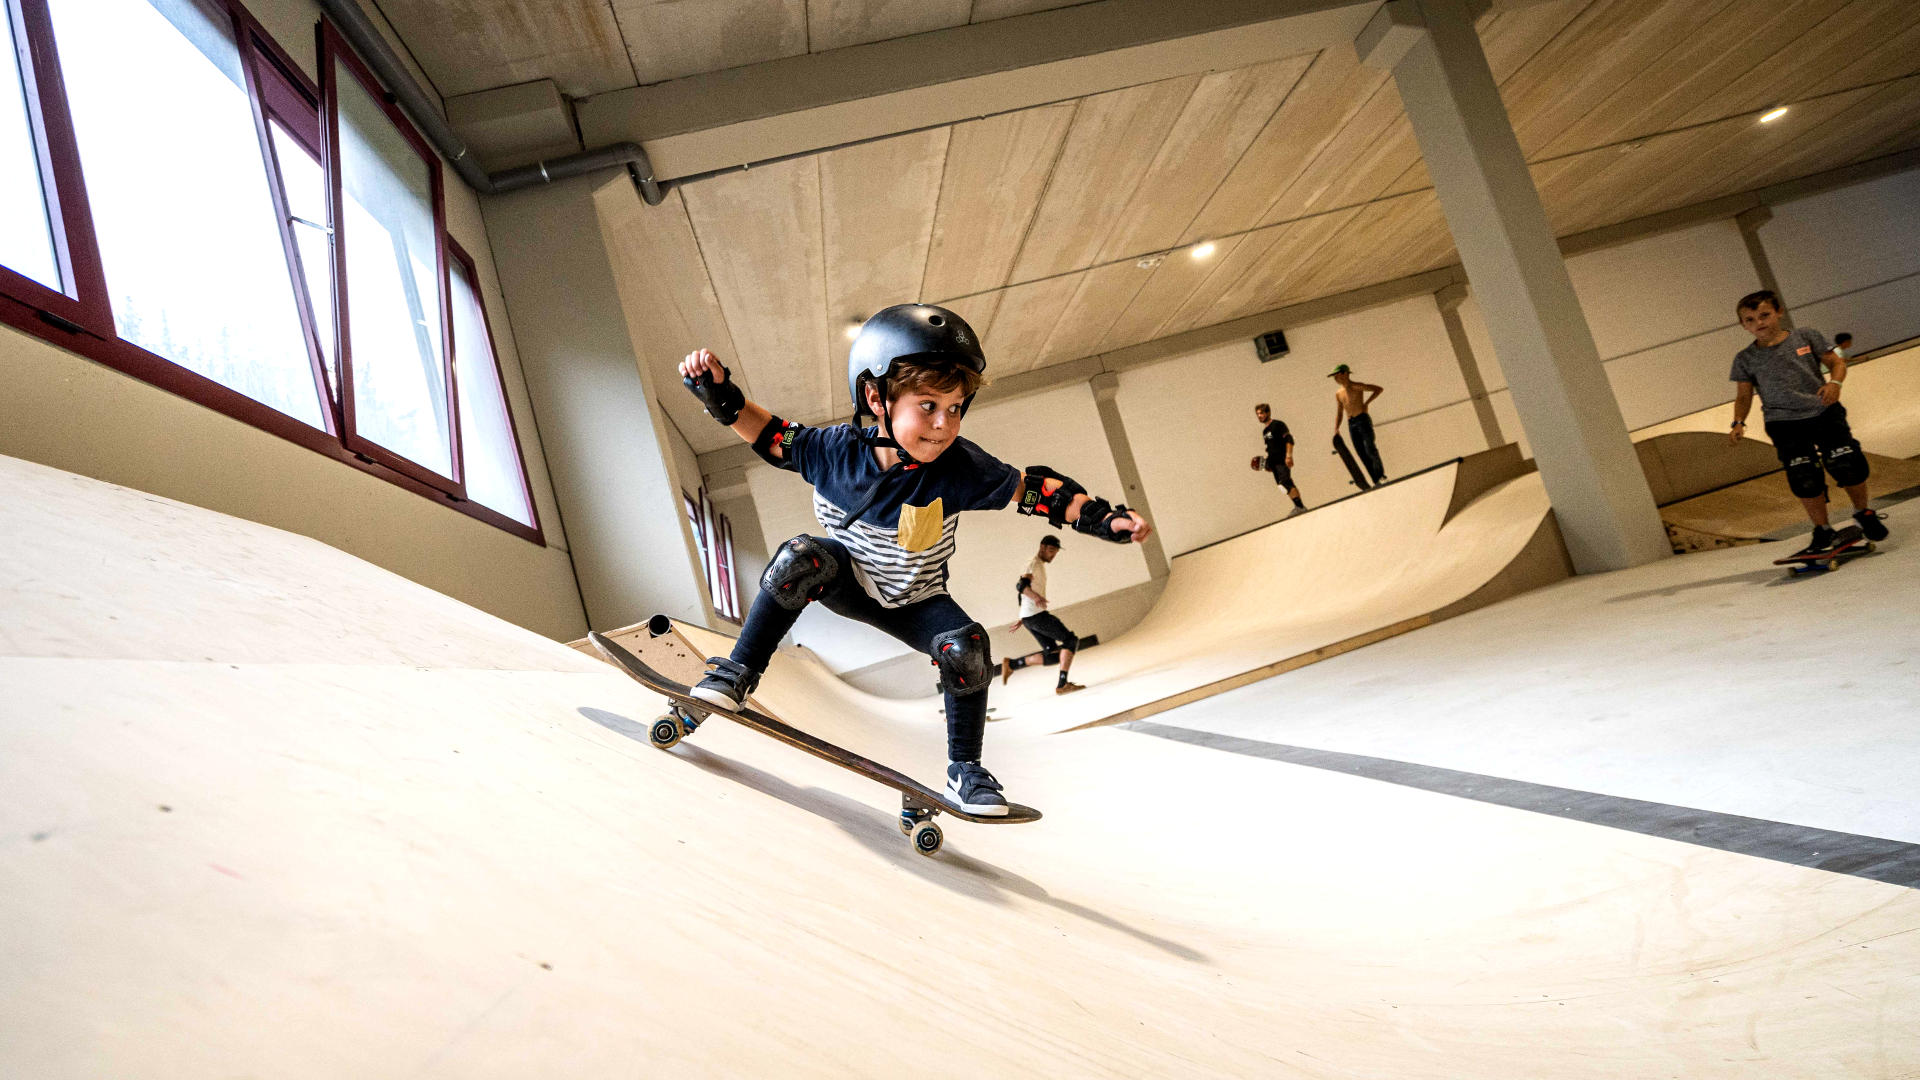 Skate Park indoor IPAR in Eibar basque country